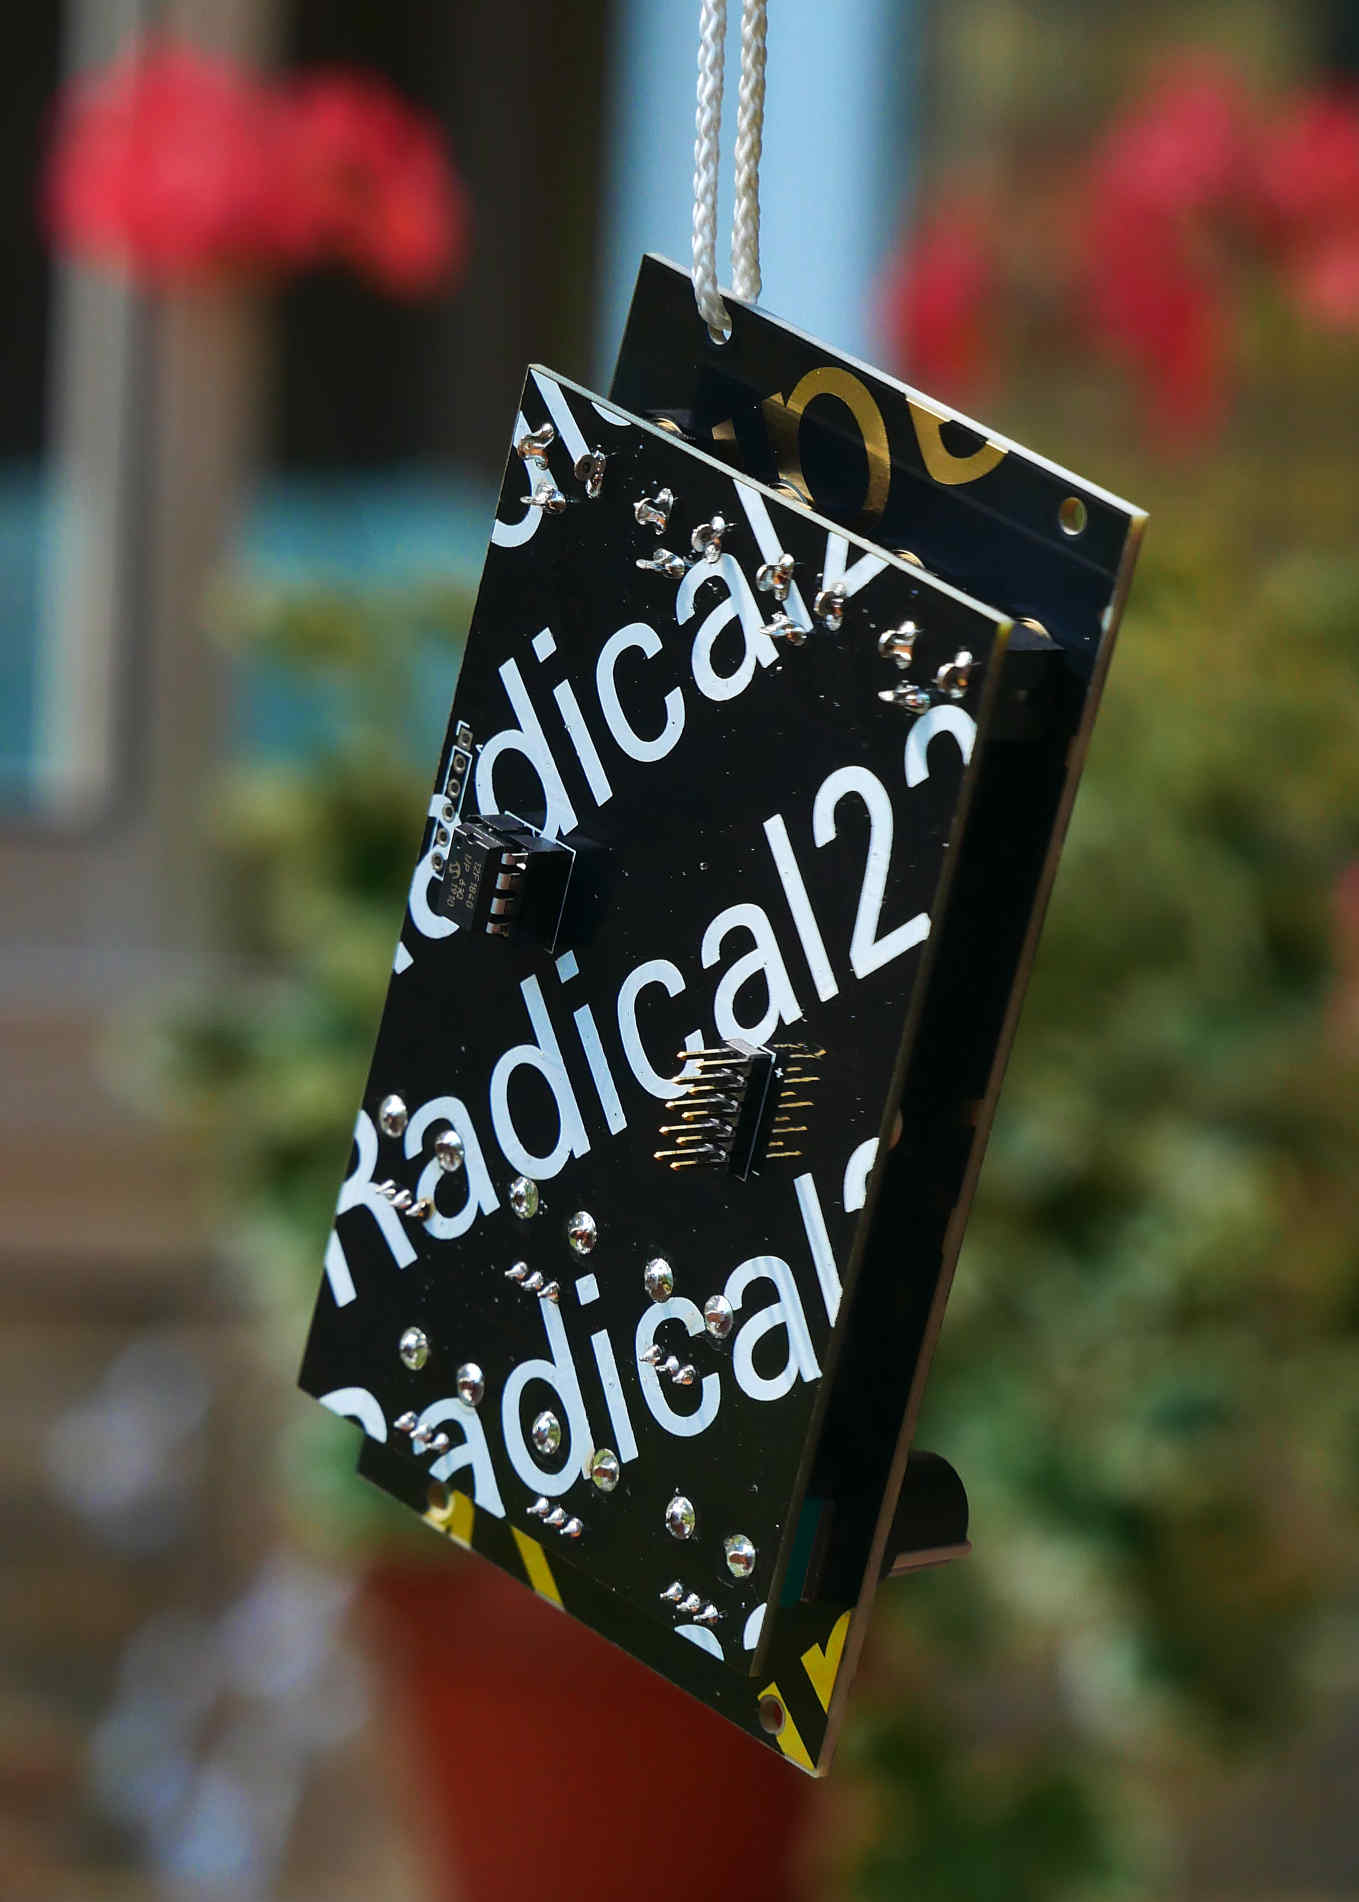 Radical22 back